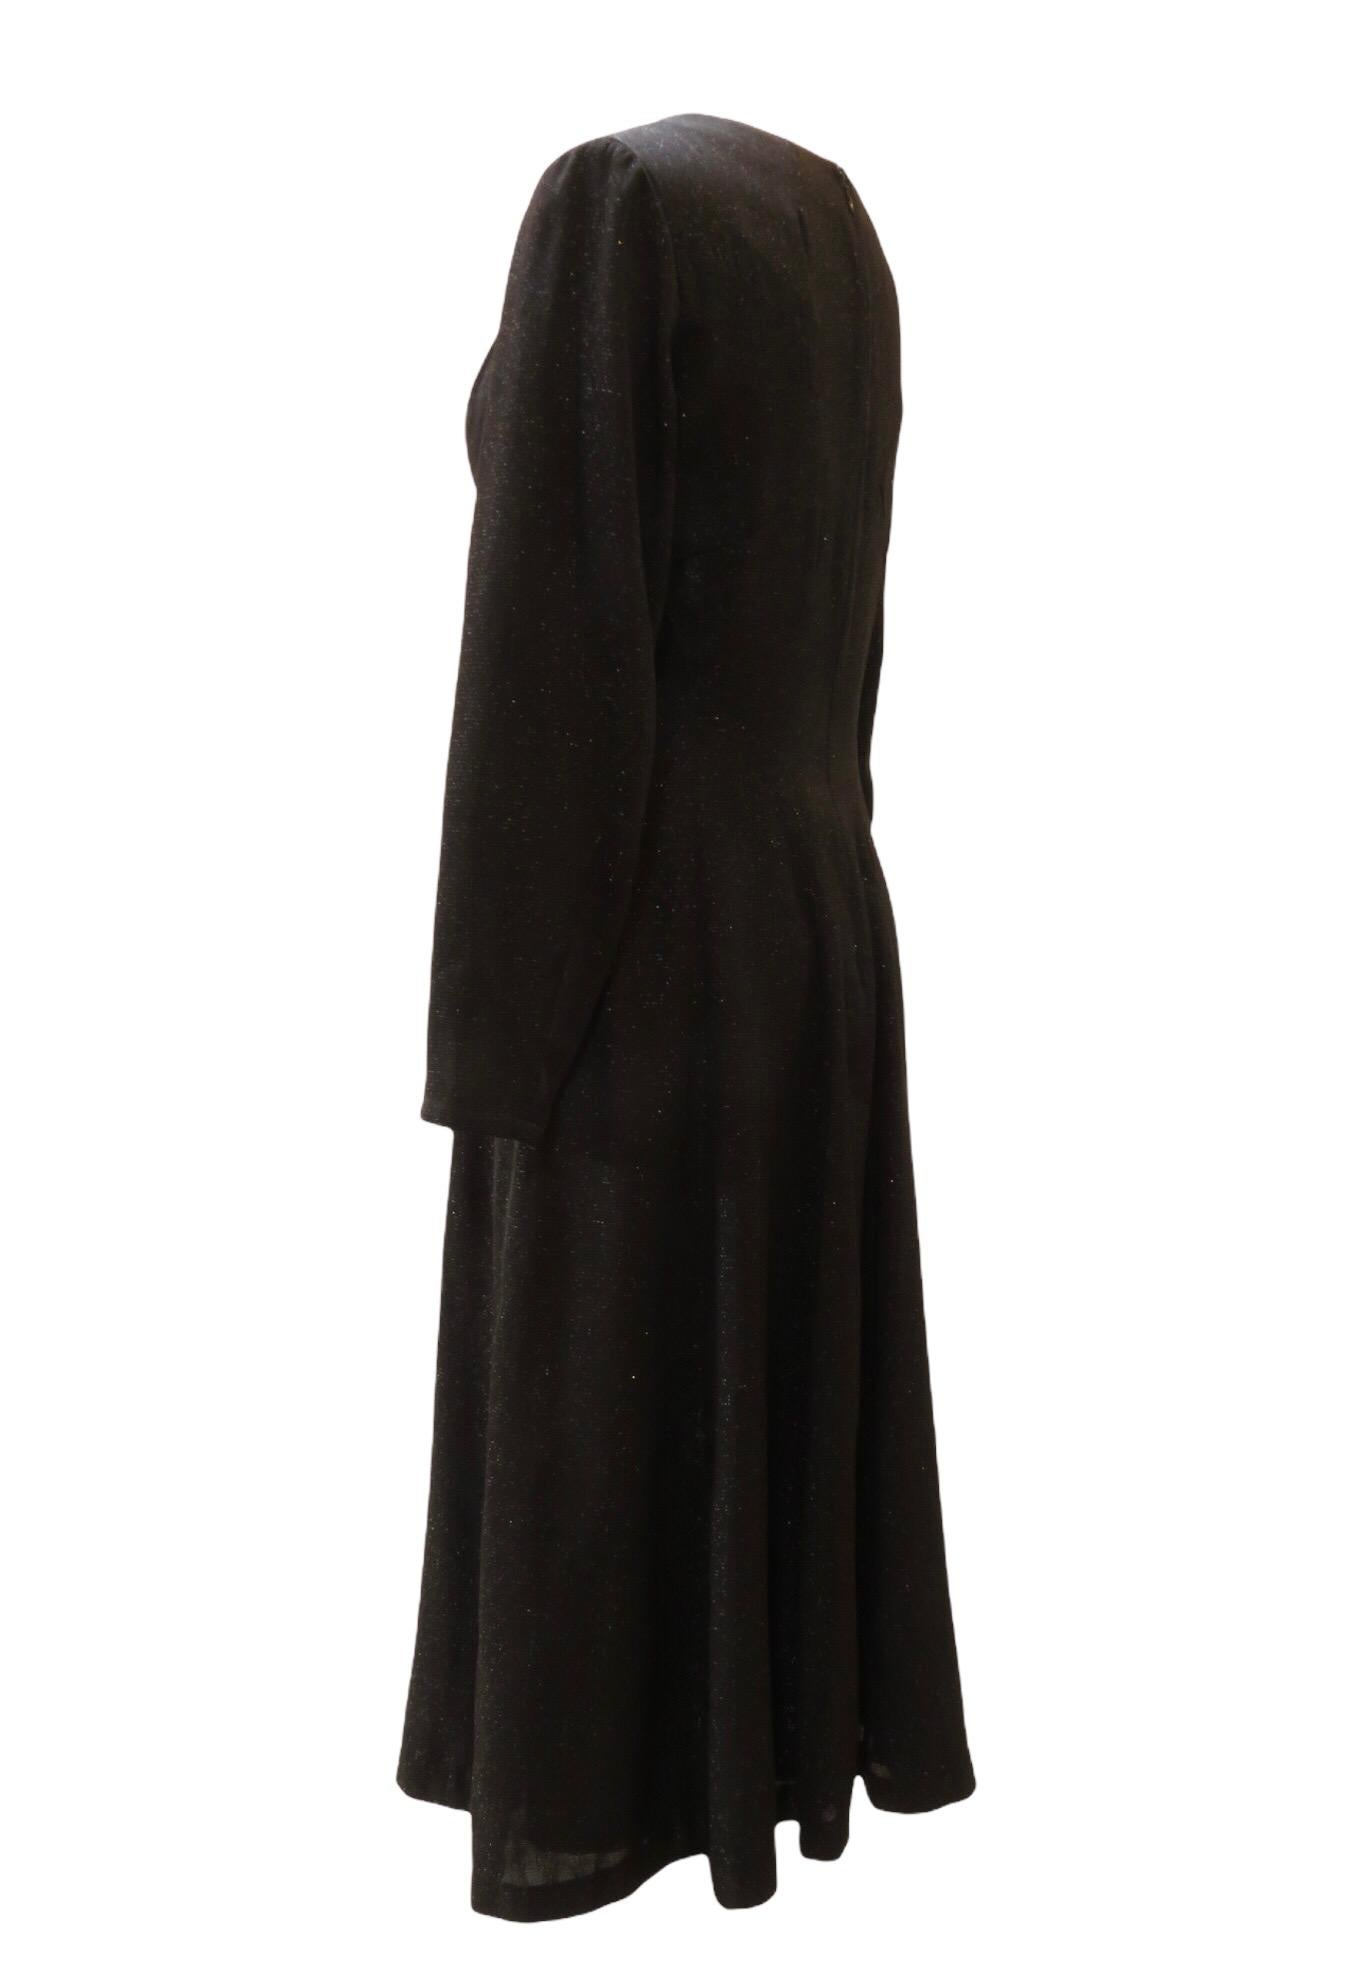 Matsuda Nicole Shimmering Black Dress In New Condition For Sale In Laguna Beach, CA